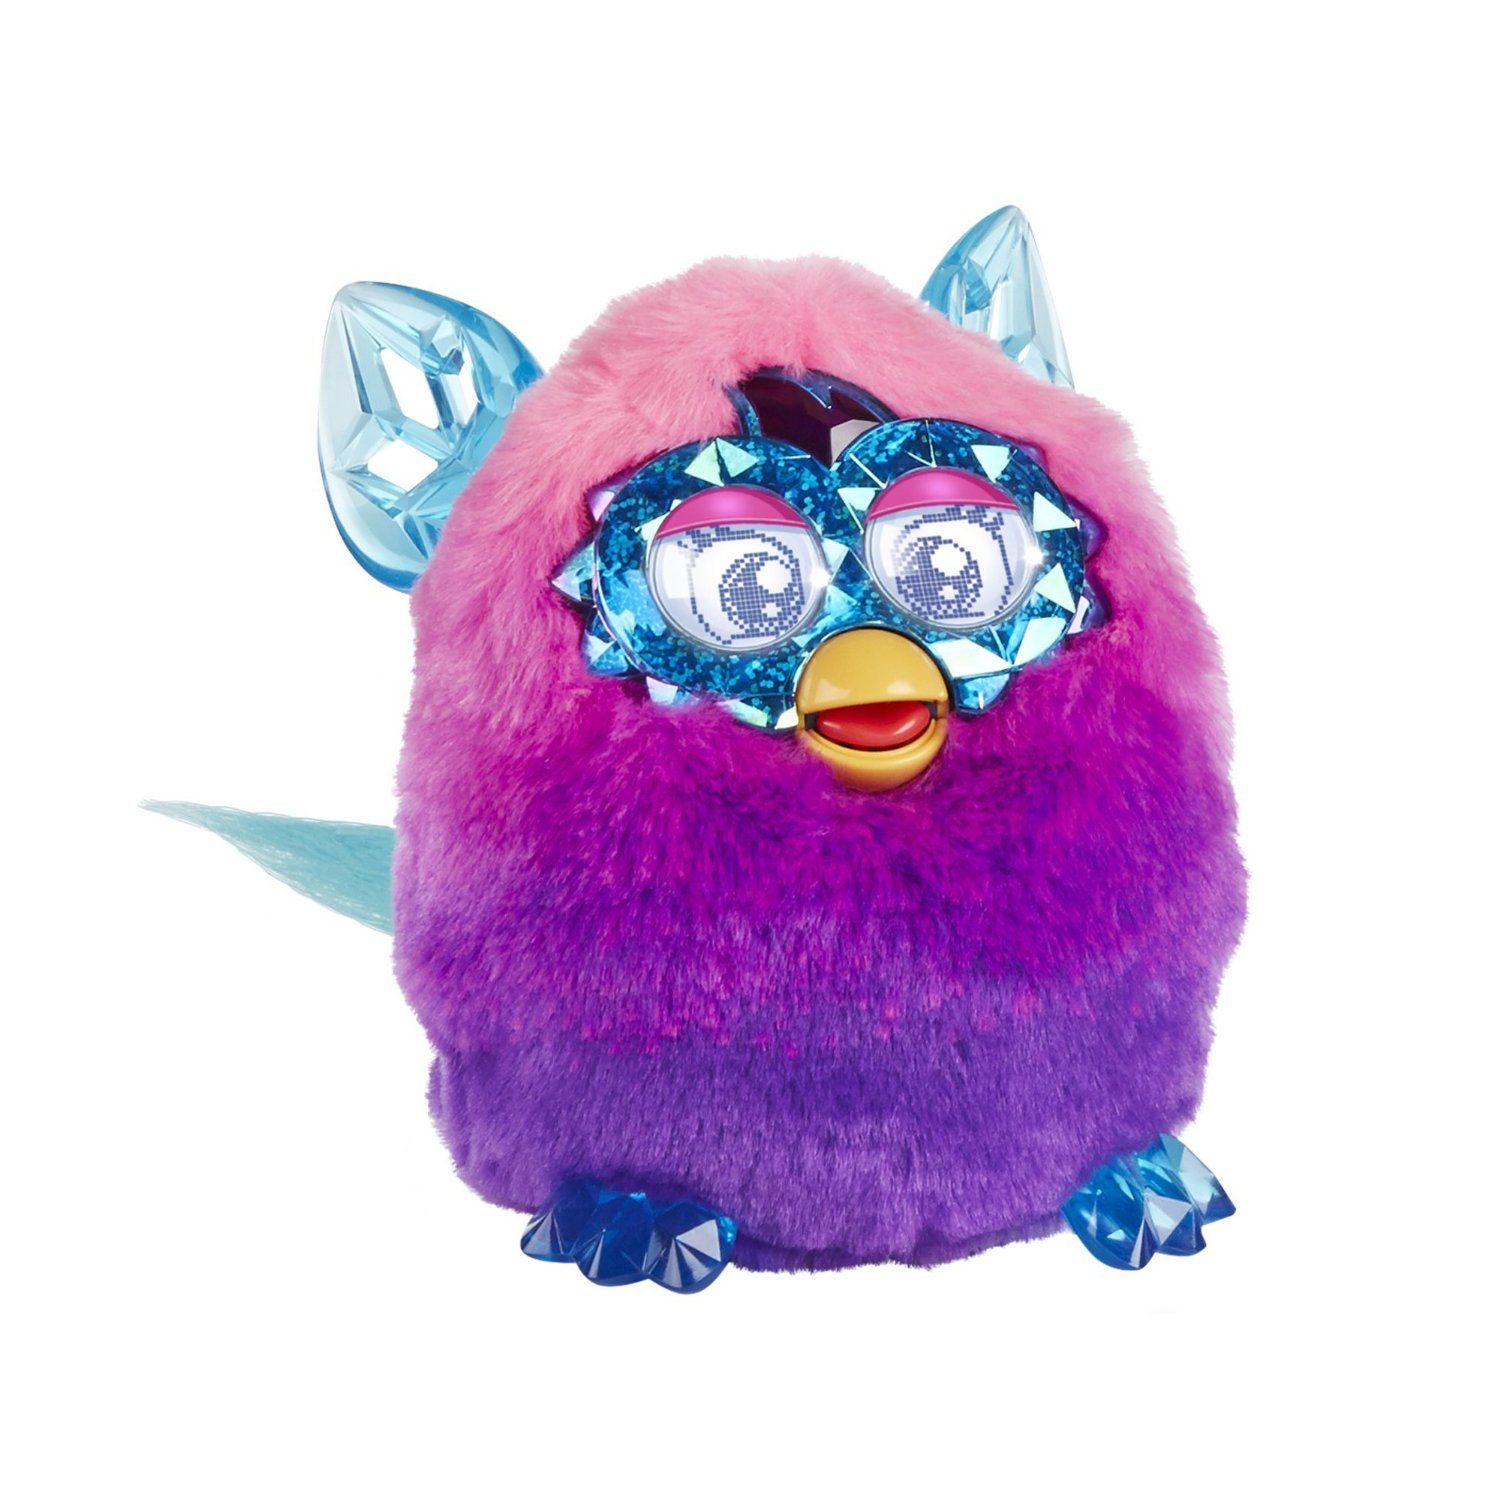 Фёрби - видео на русском о игрушке Ферби. Обзоры Furby на русском языке